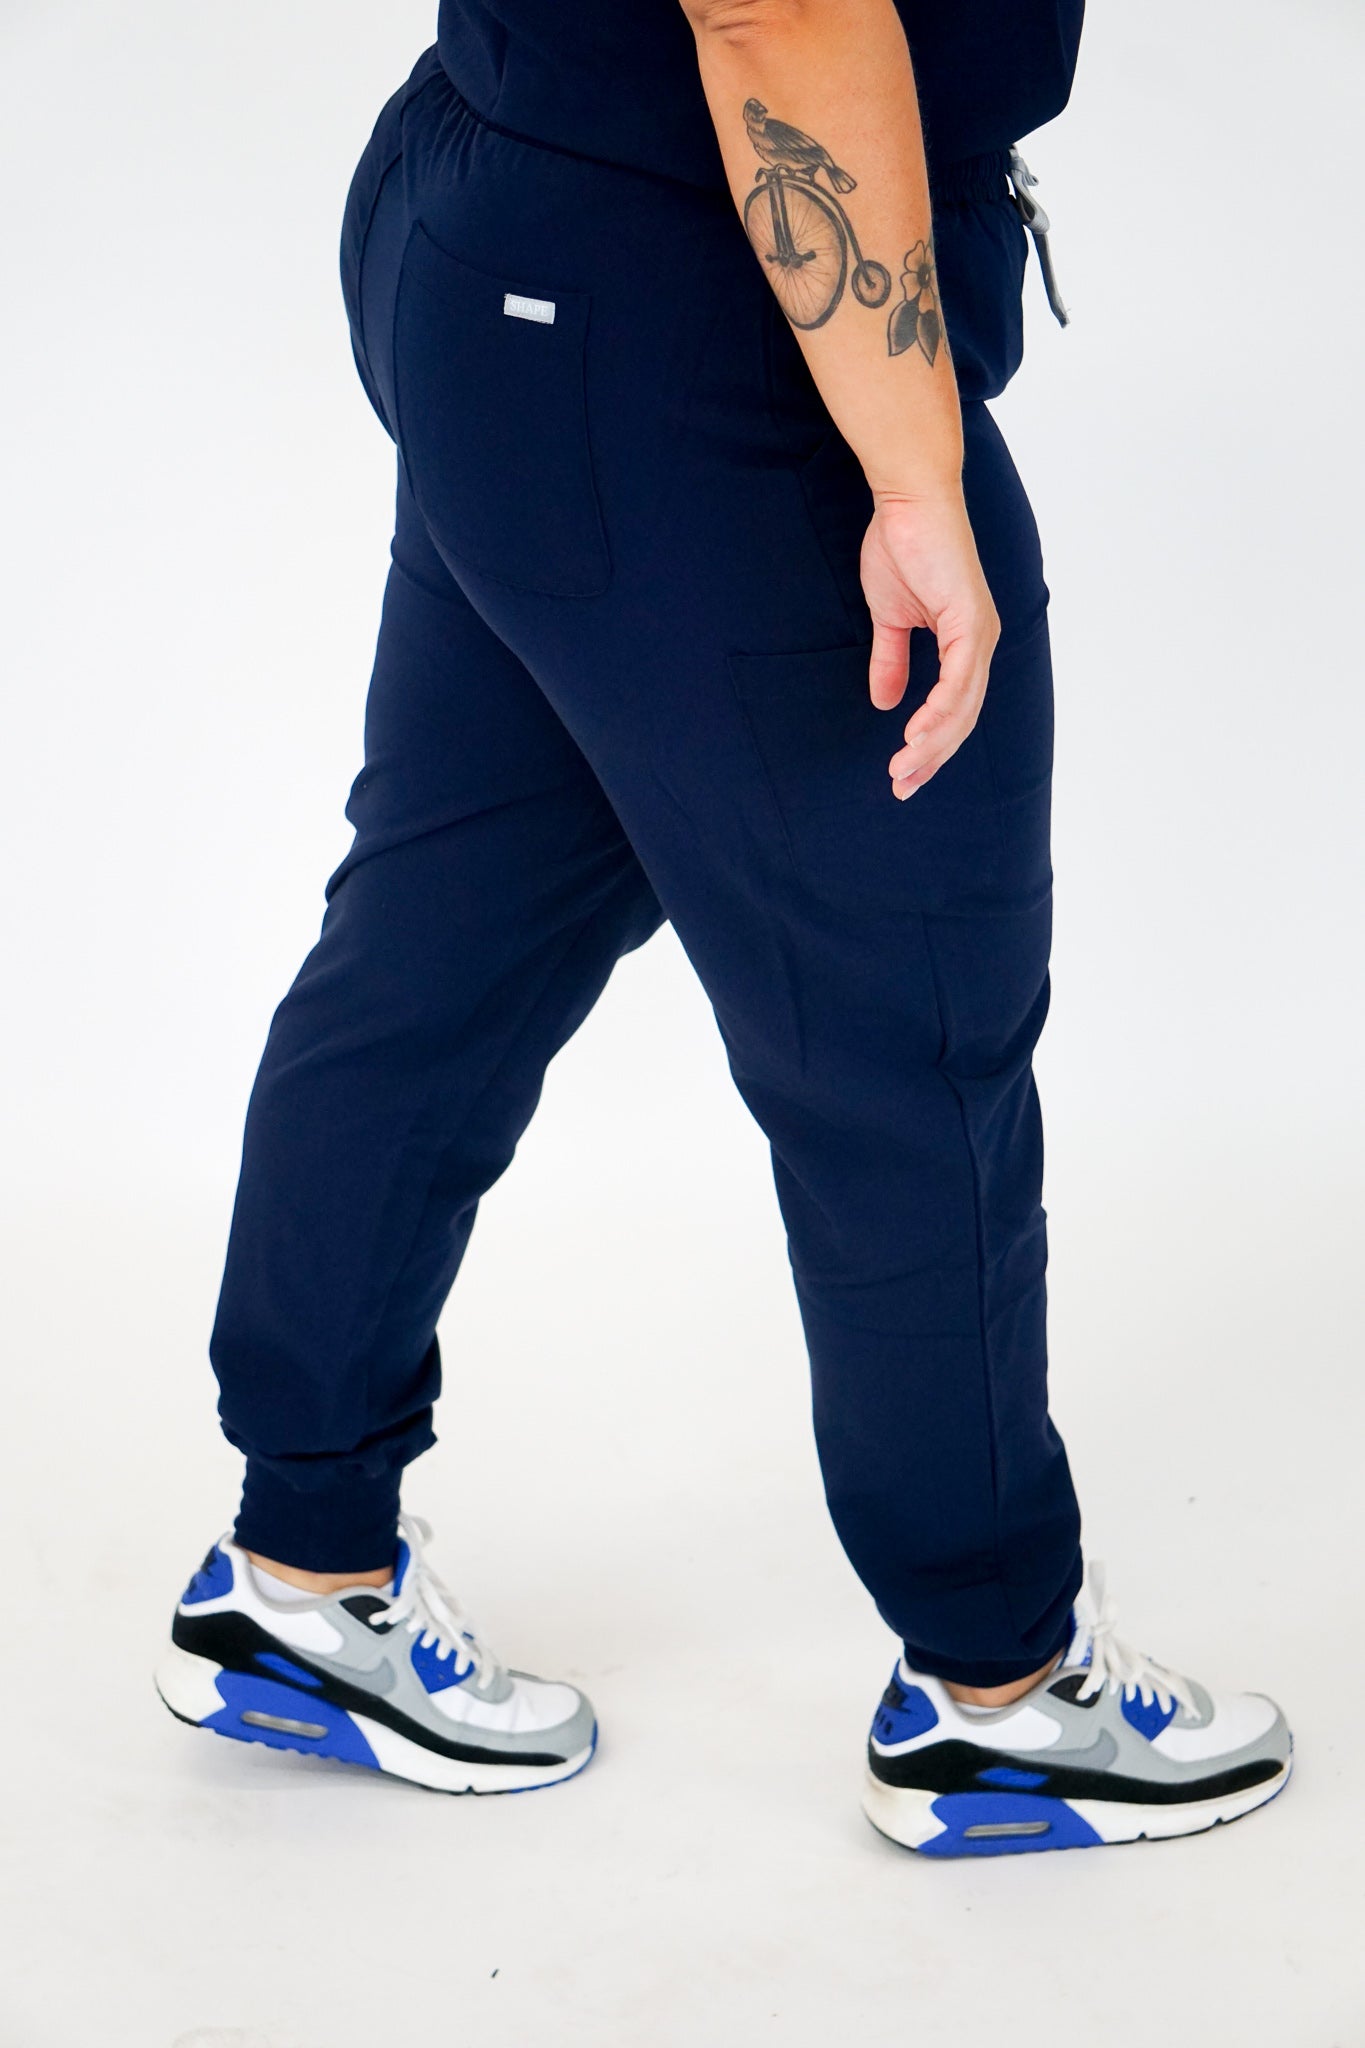 Six pocket jogger Pants for Ladies